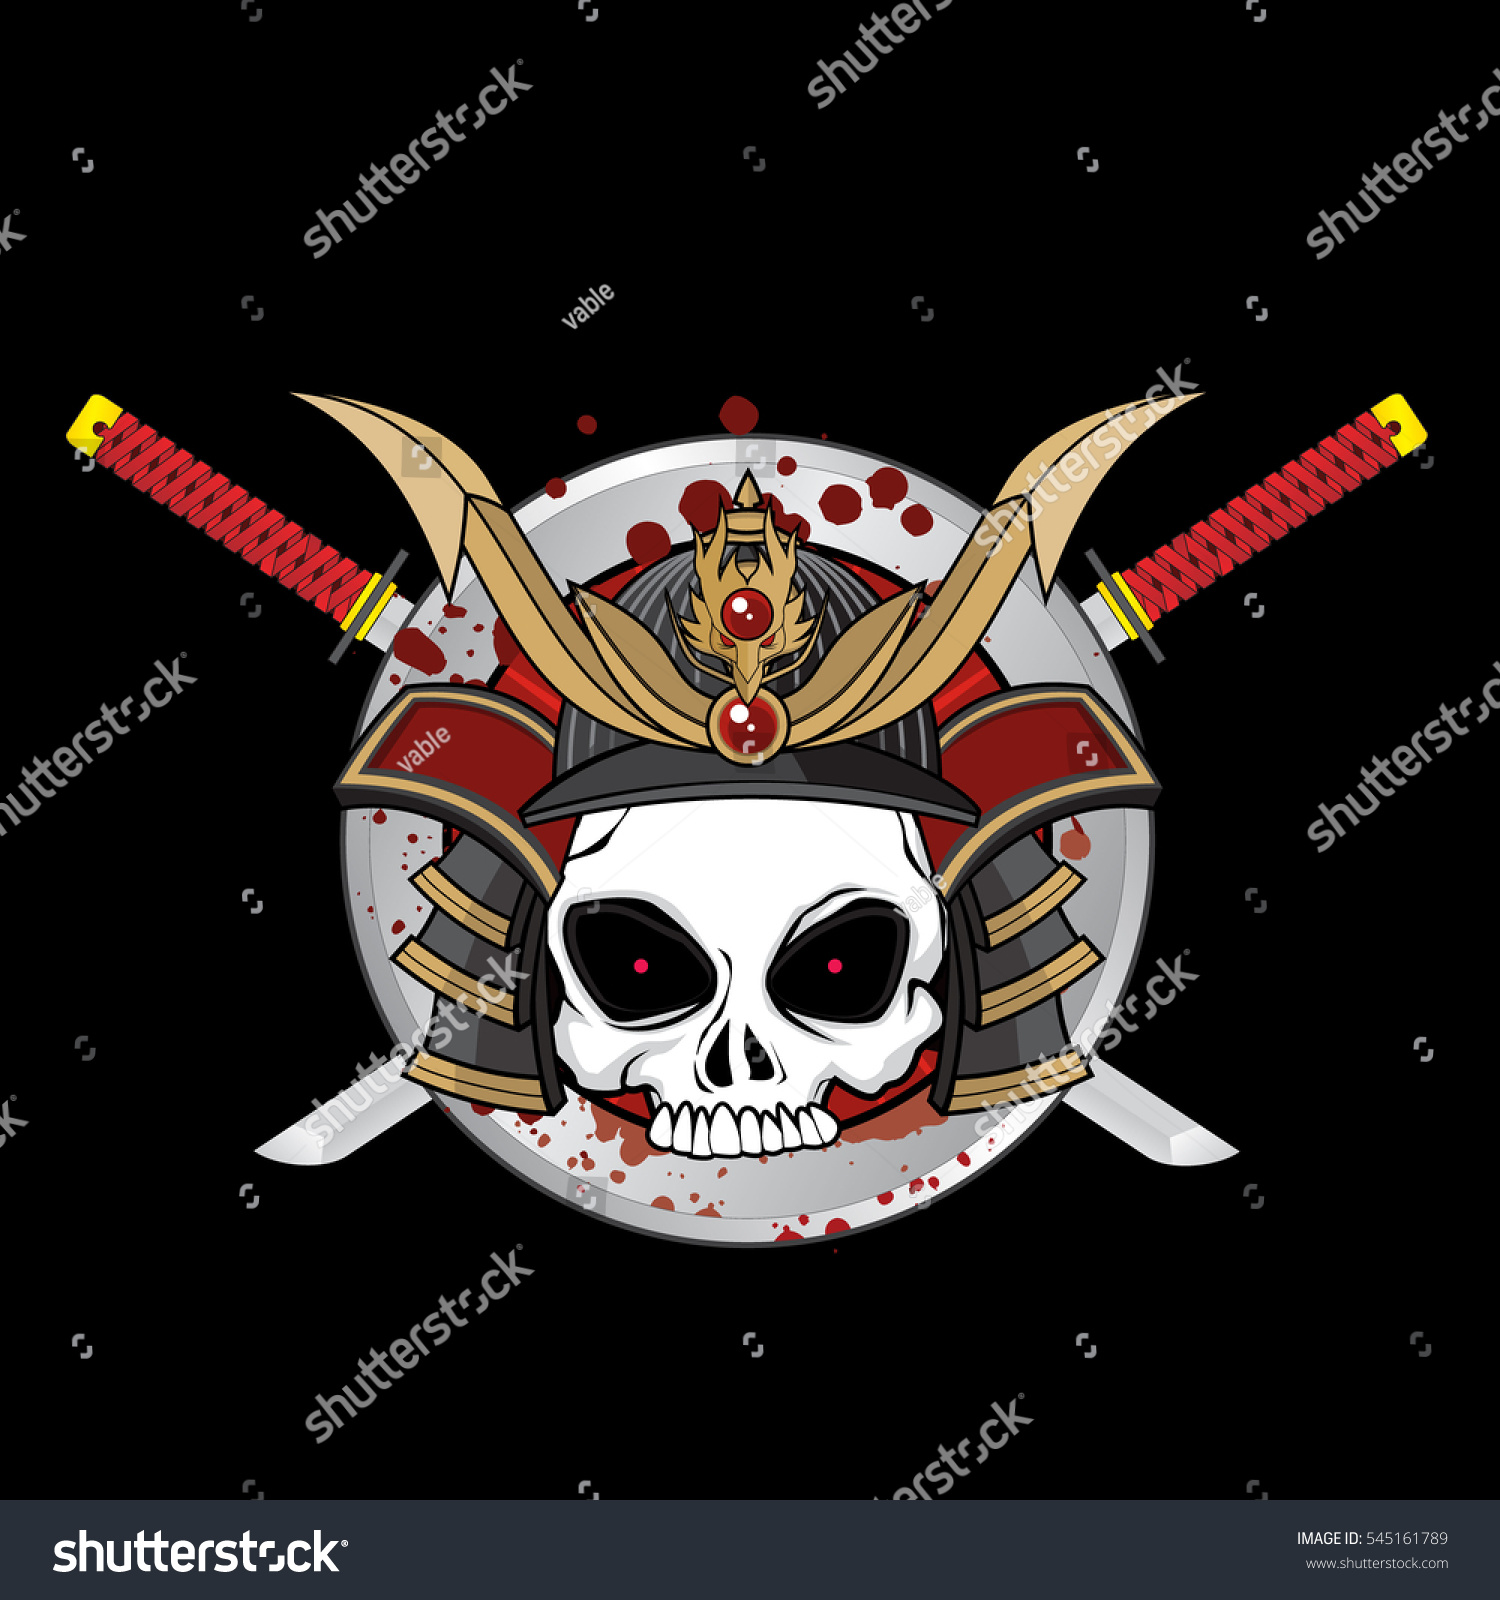 Japanese Skull Warrior Stock Photo 545161789 Avopix Com - blood skull warrior decal roblox